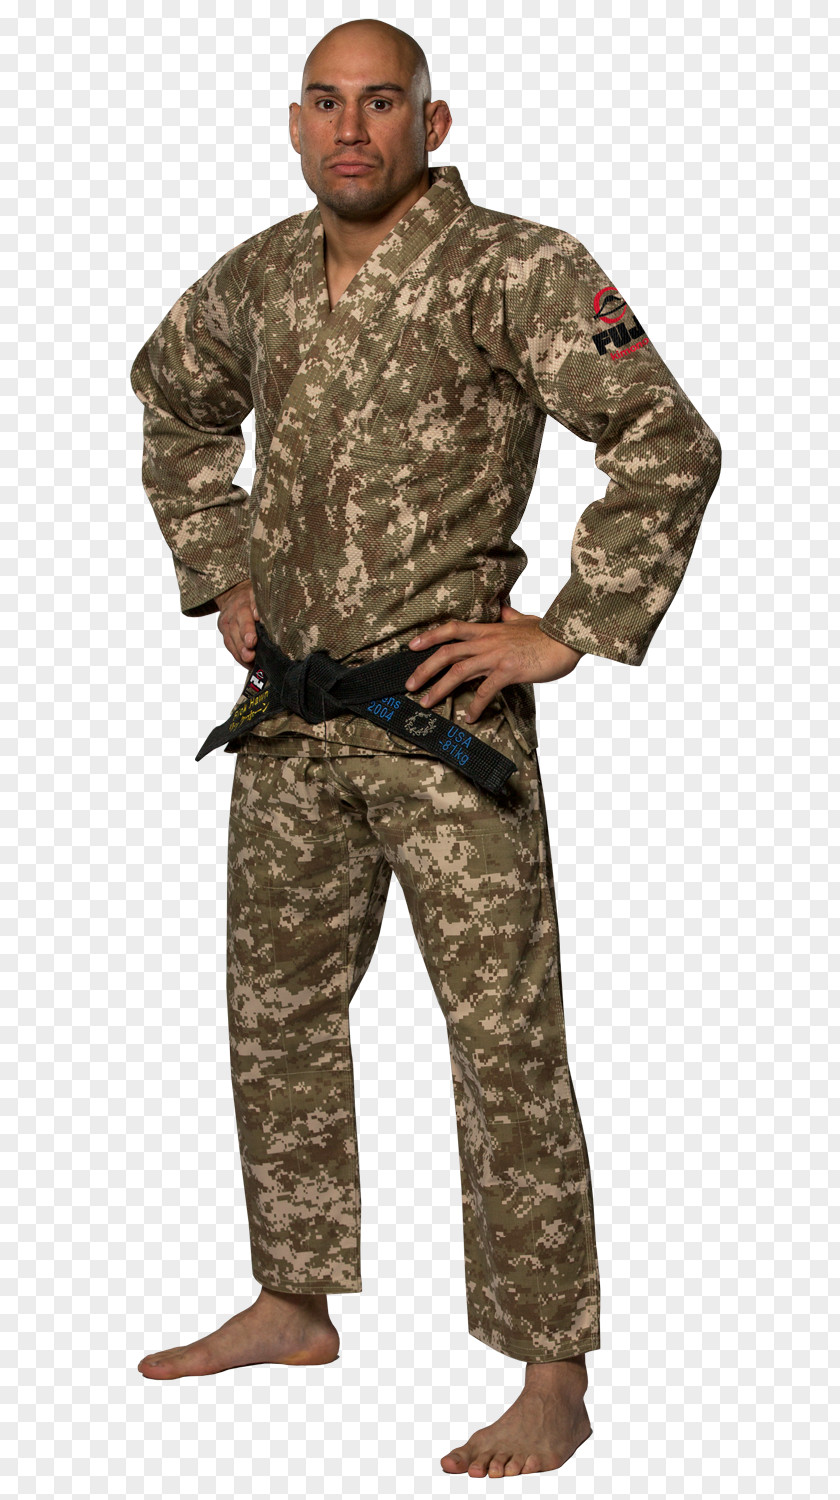 Jacket Camouflage Costume Clothing Military Uniform PNG